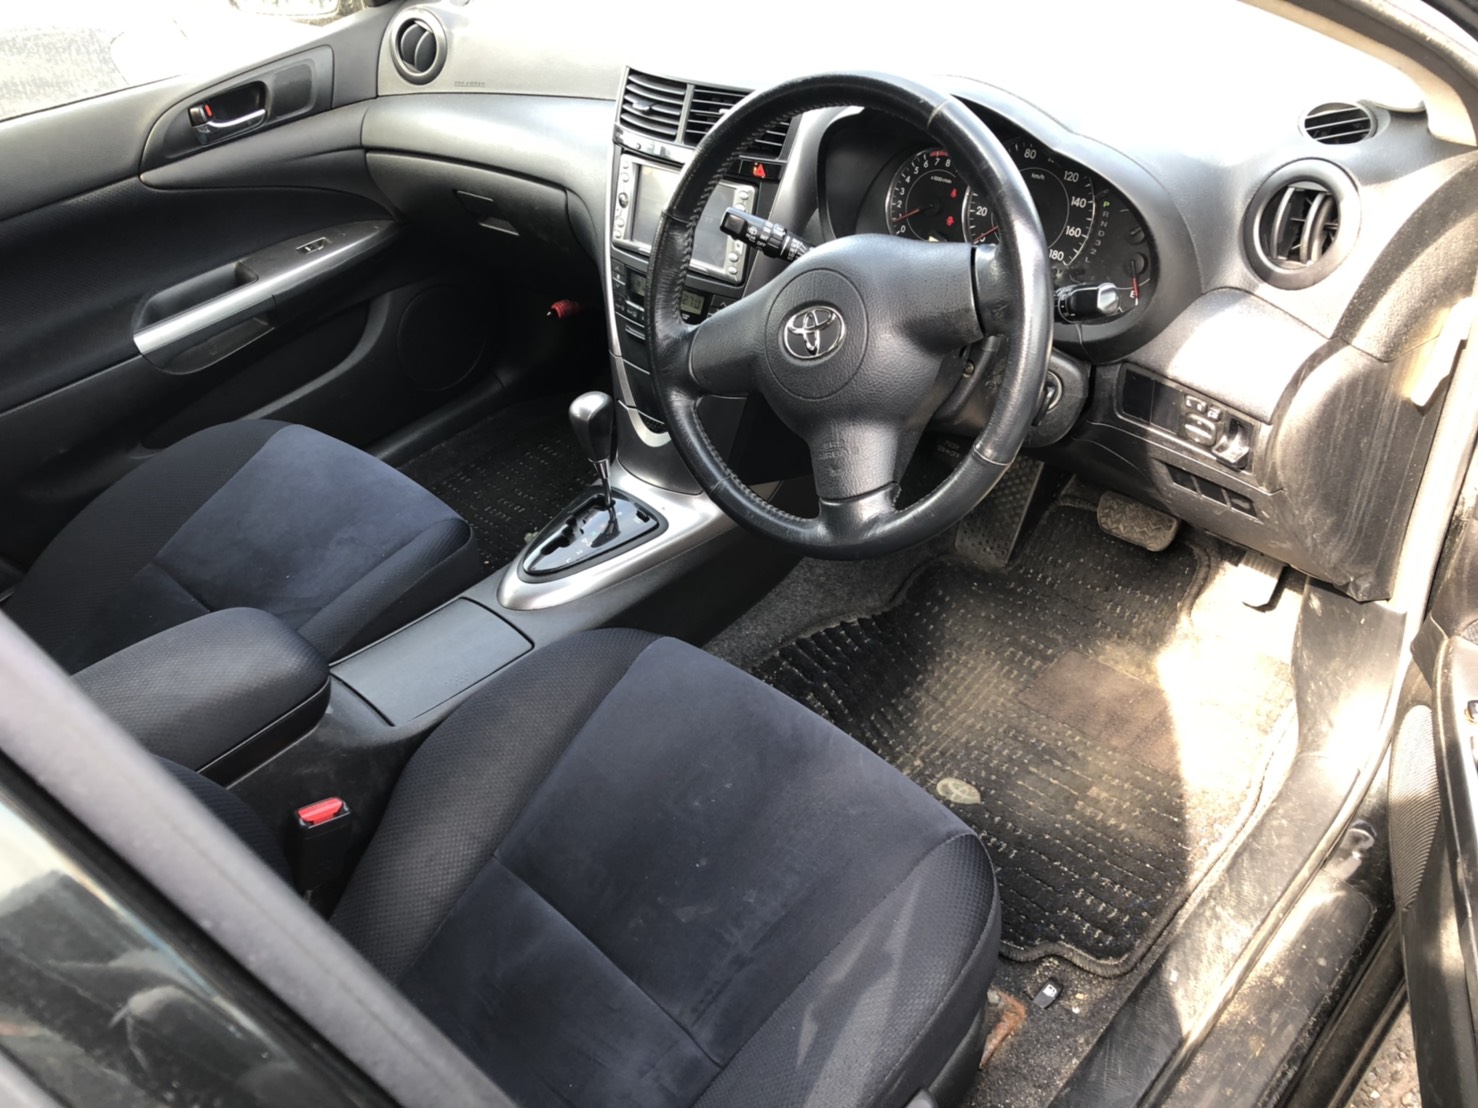 inside of car AZT246 - 2004 Toyota CALDINA 4WD - BLACK